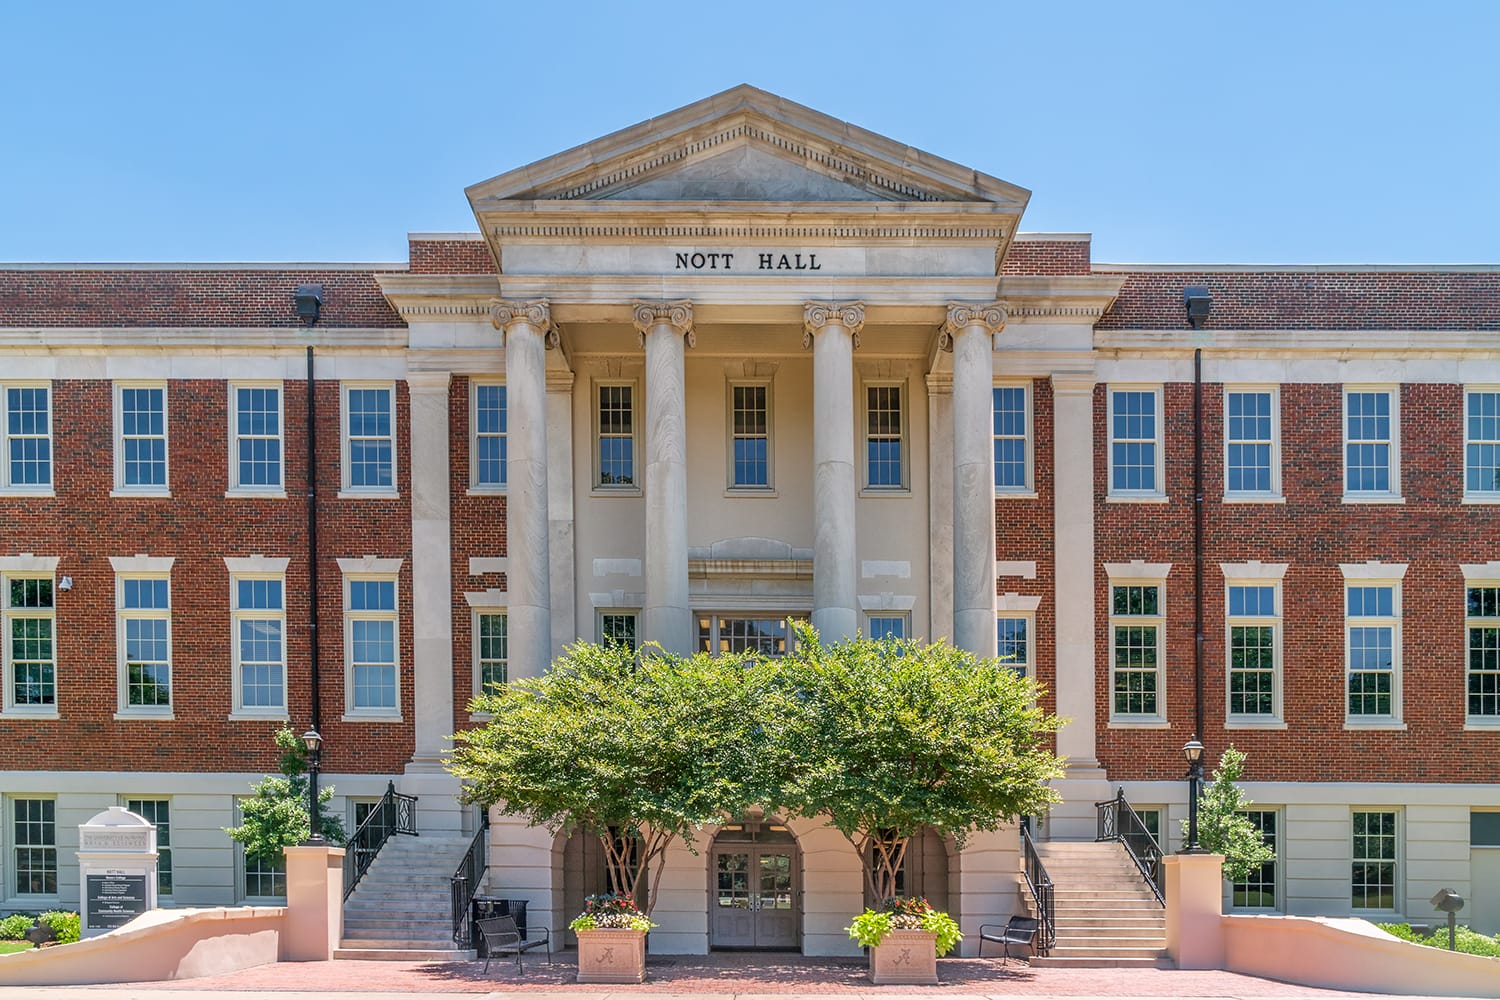 Nott Hall on the campus of University of Alabama in Tuscaloosa